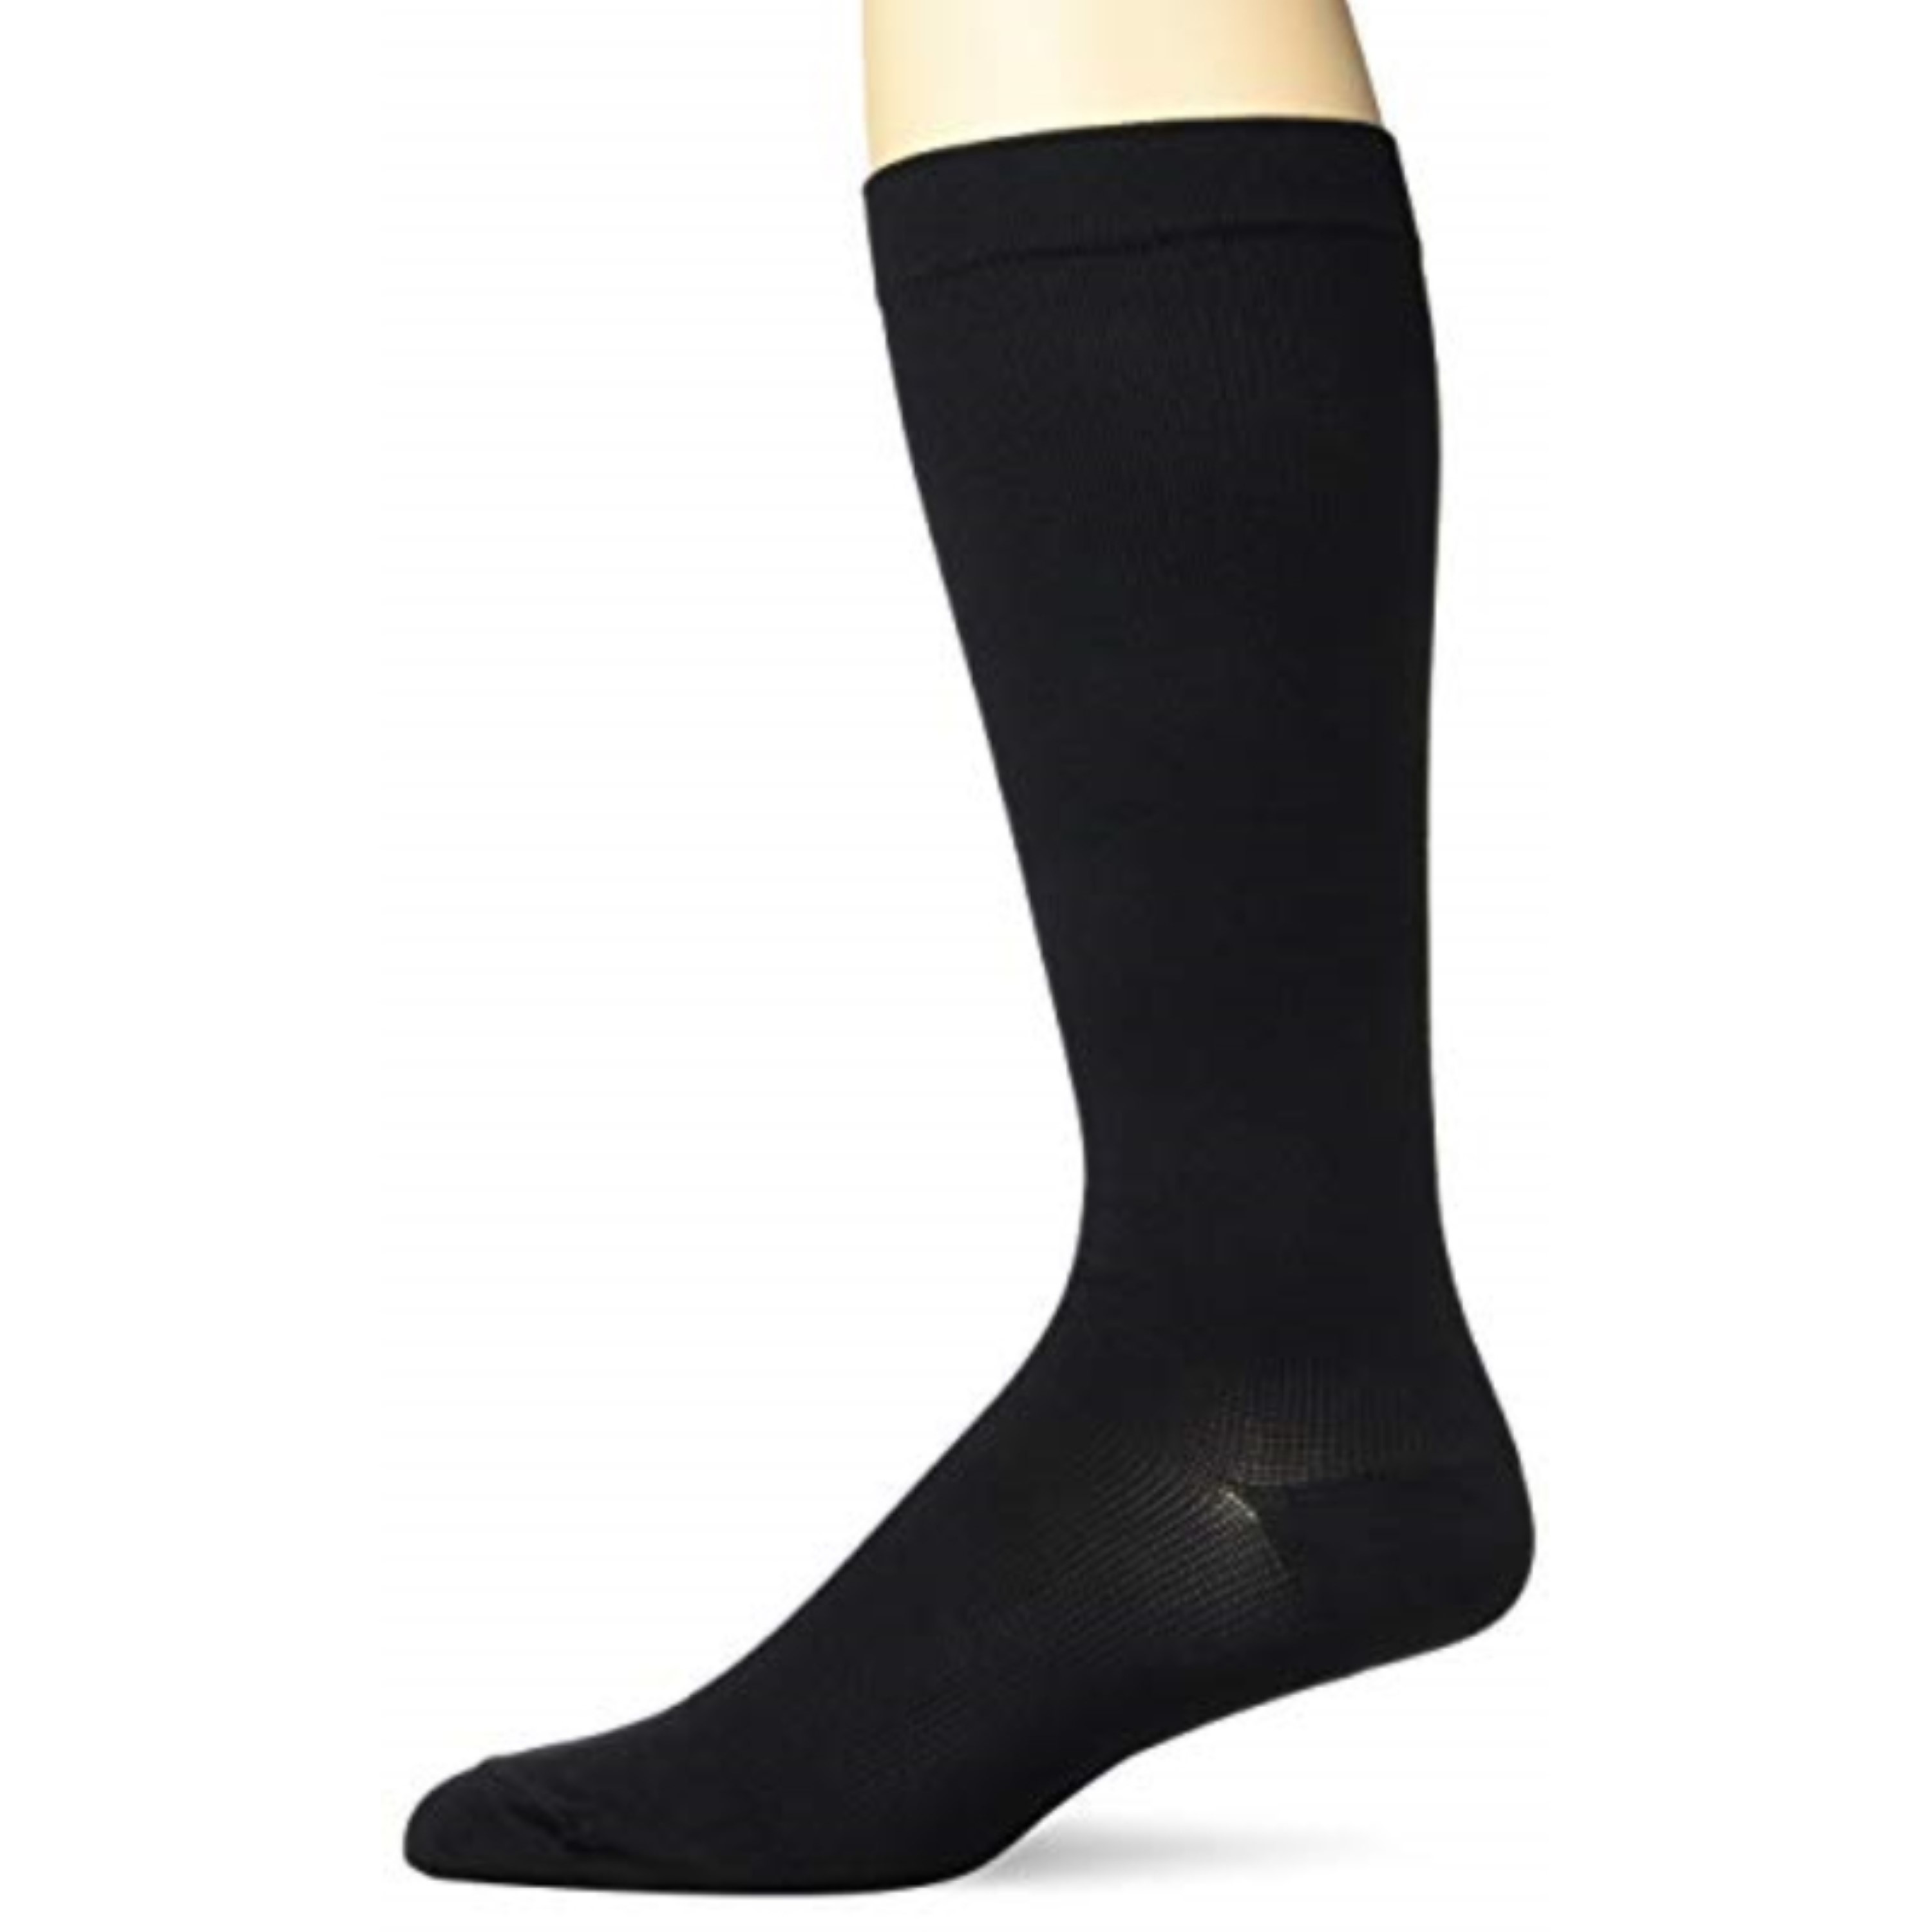 Futuro 3m Futuro Dress Socks For Men Black 71035 Medium | Wholesale ...